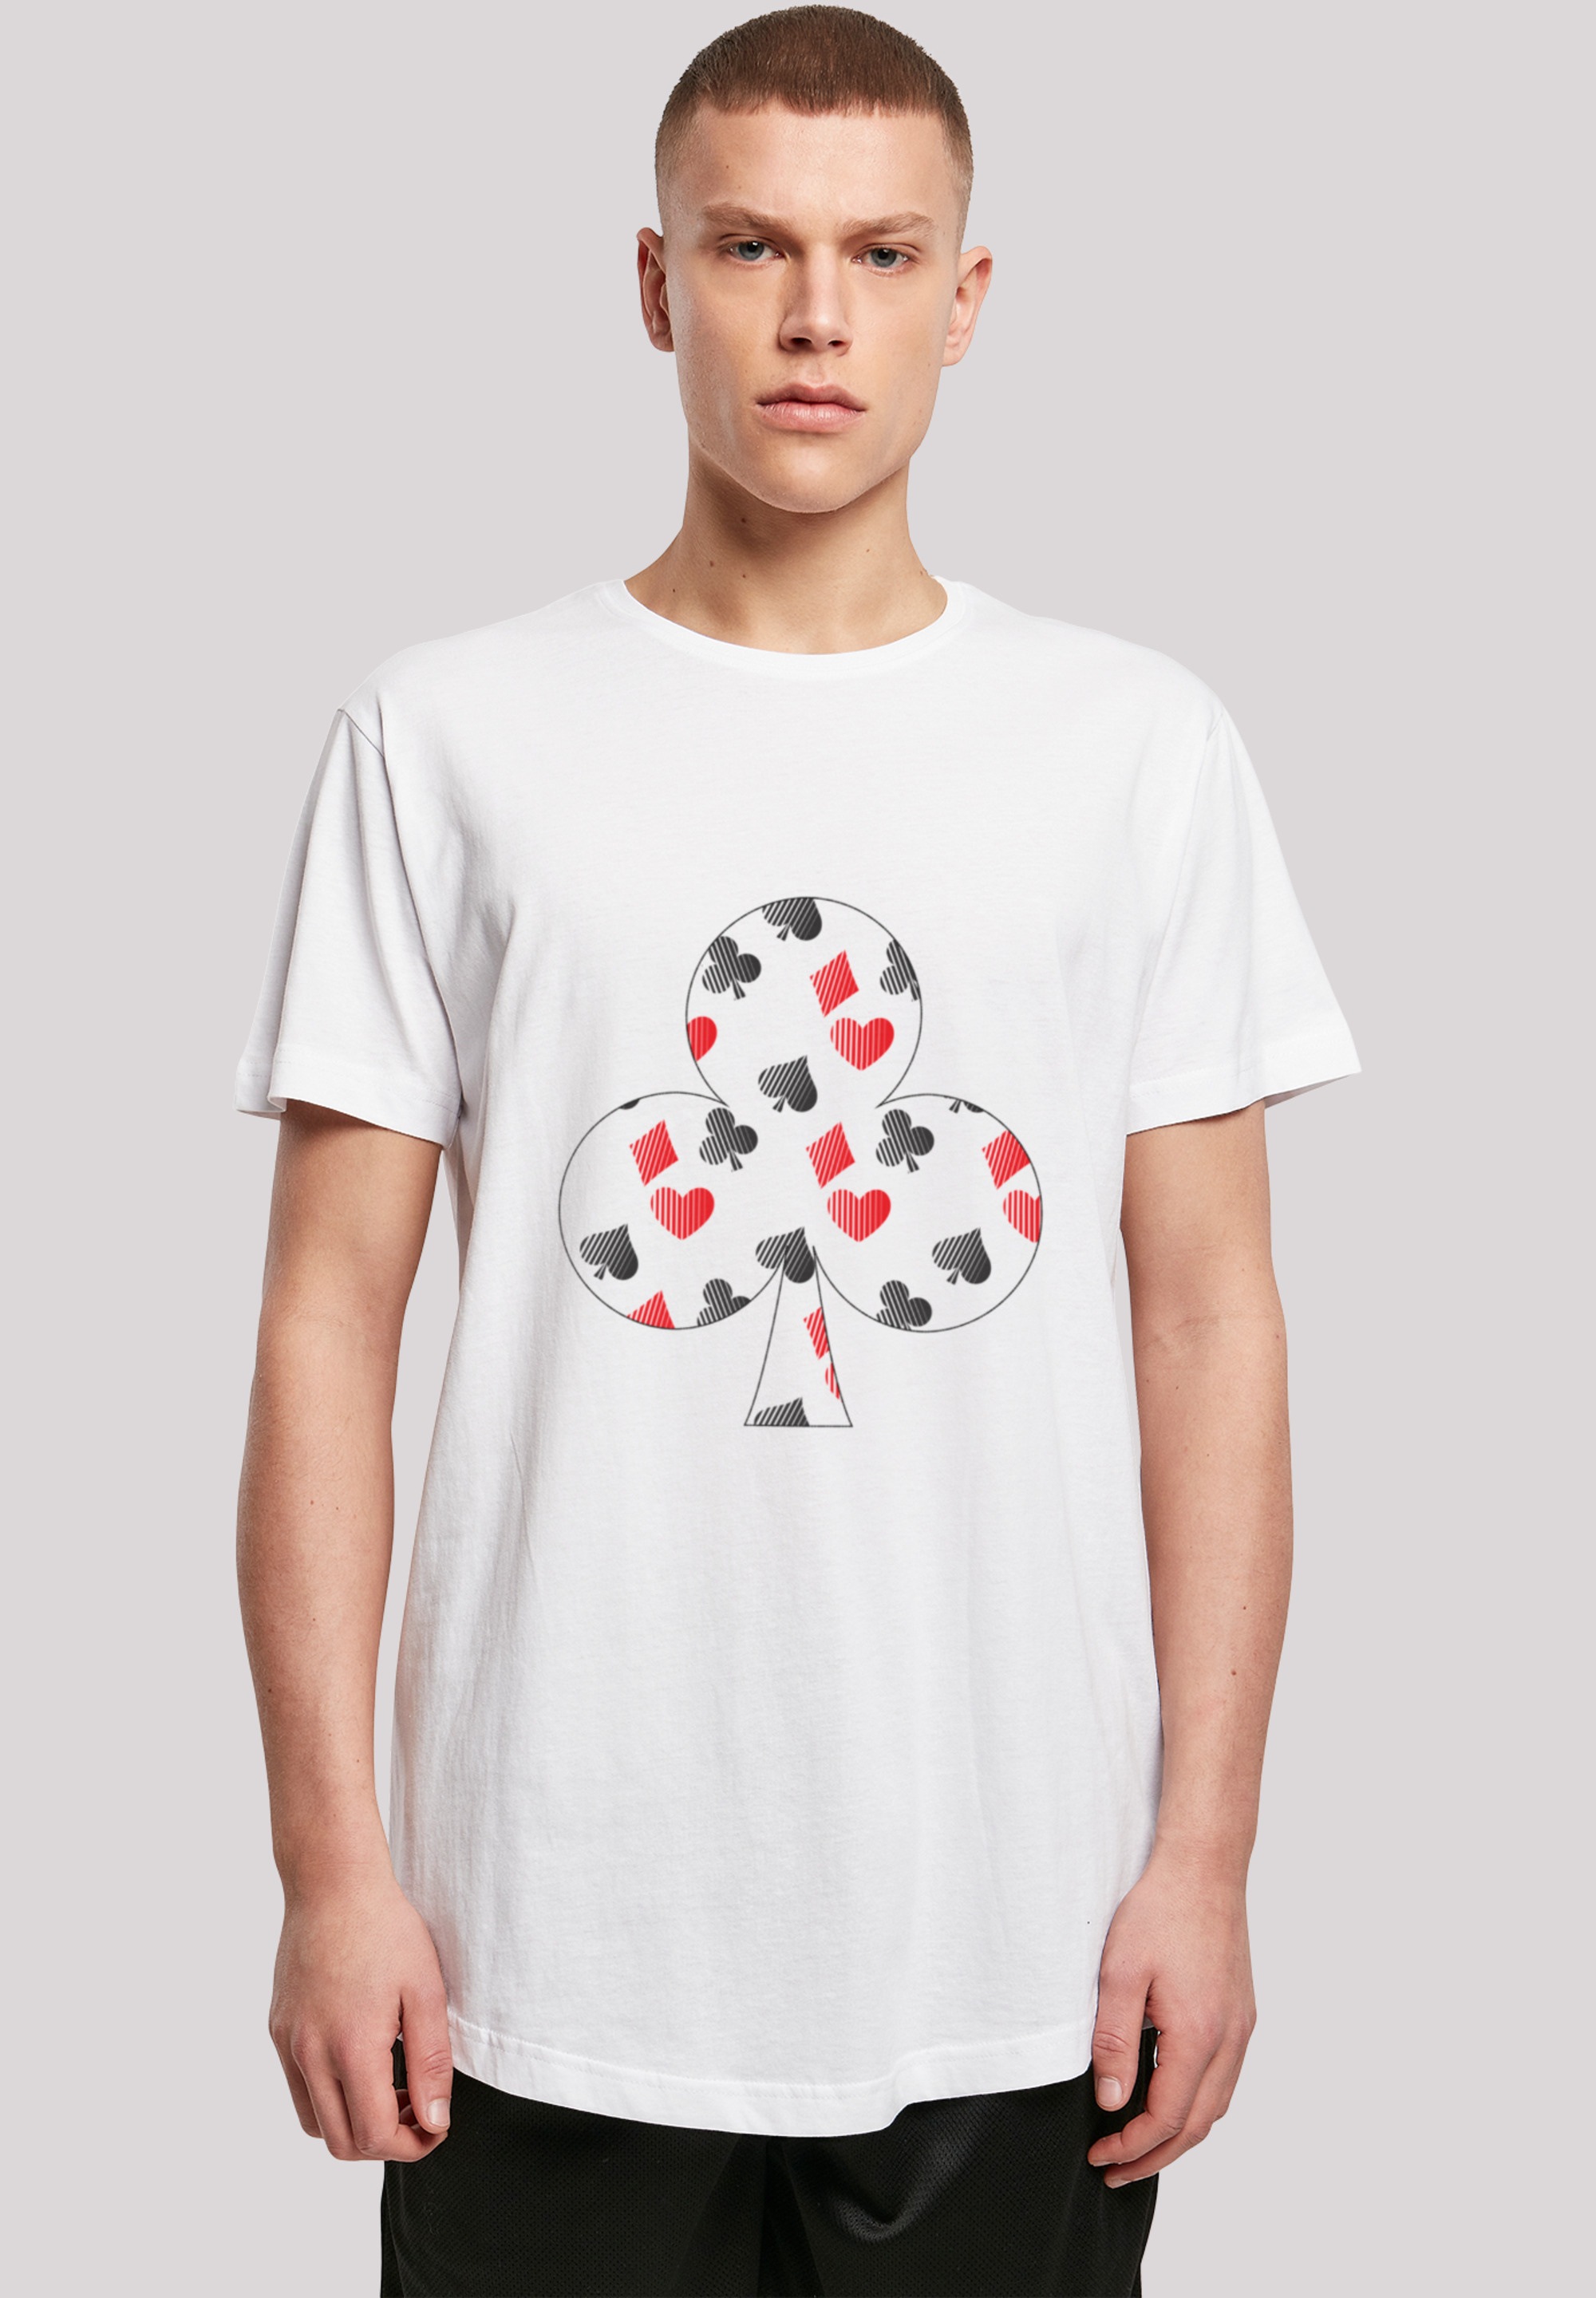 F4NT4STIC T-Shirt »Kartenspiel Kreuz Herz Karo Pik Poker«, Print